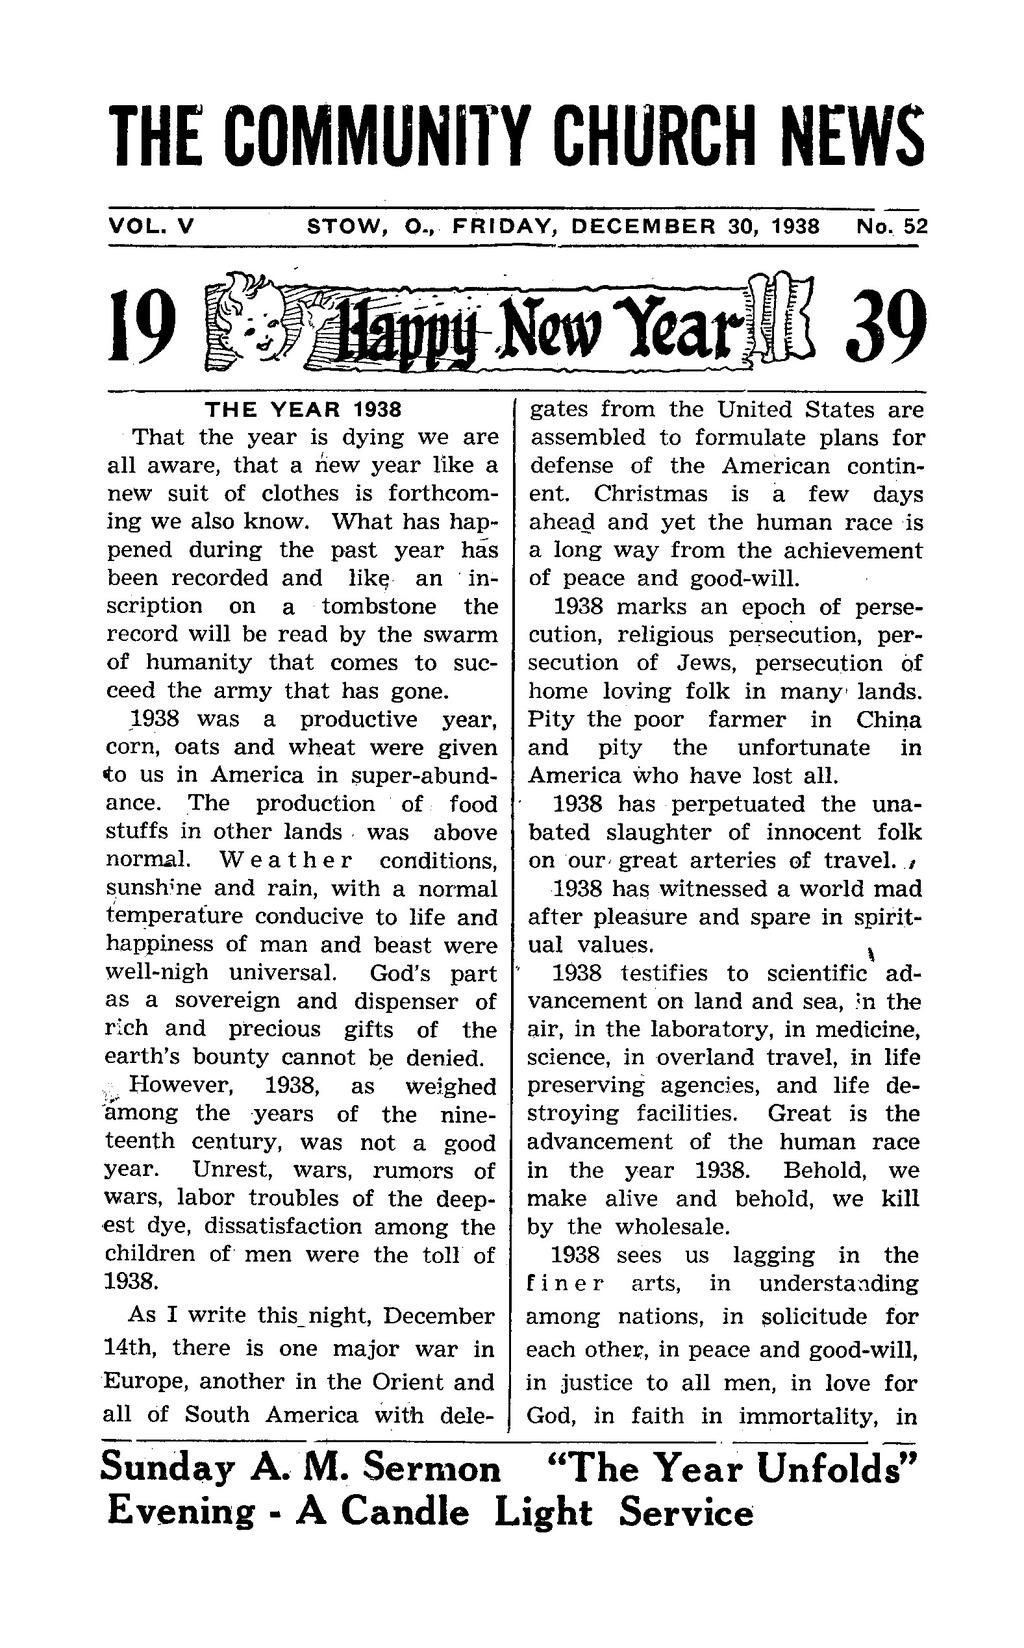 THE COMMUNITY CHURCH NEWS VOL. V STOW, O., FRIDAY, DECEMBER 30, 1938 No.